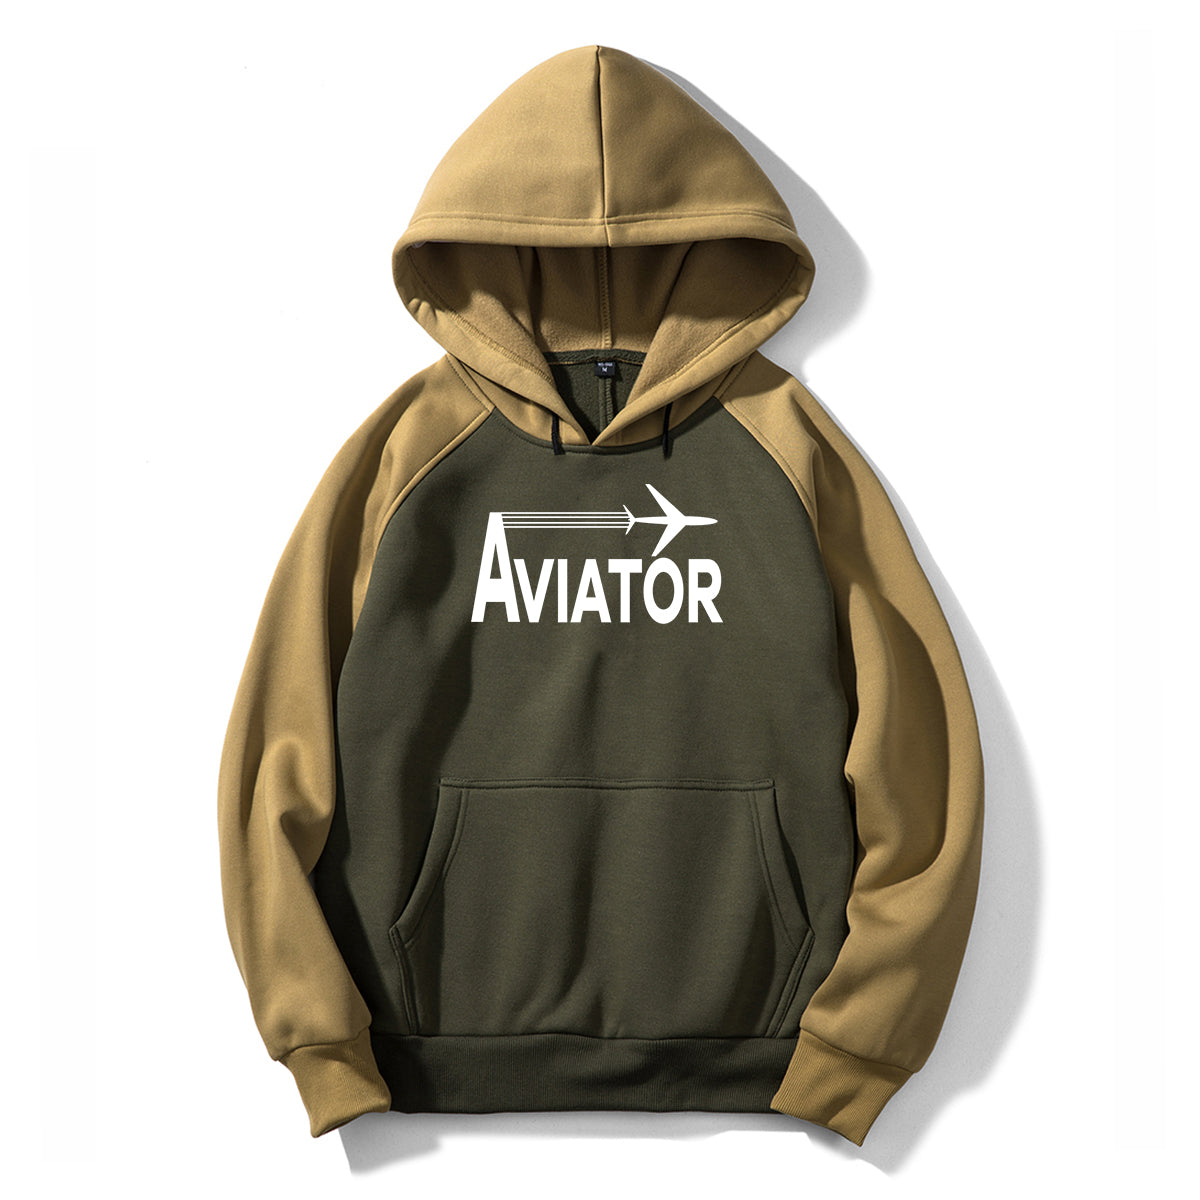 Aviator Designed Colourful Hoodies